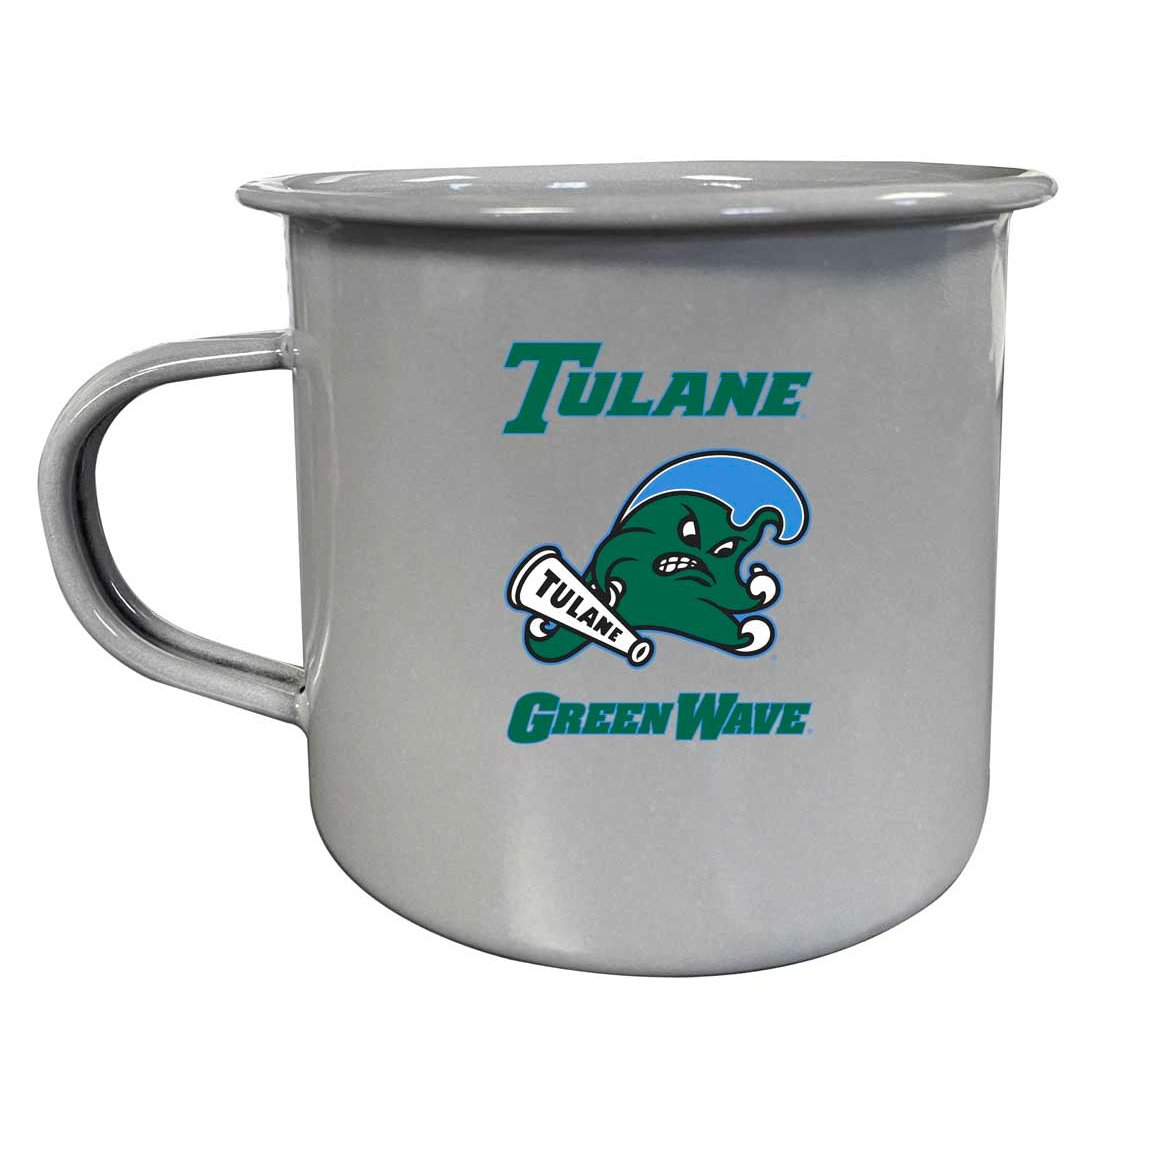 Tulane University Green Wave Tin Camper Coffee Mug - Choose Your Color - White